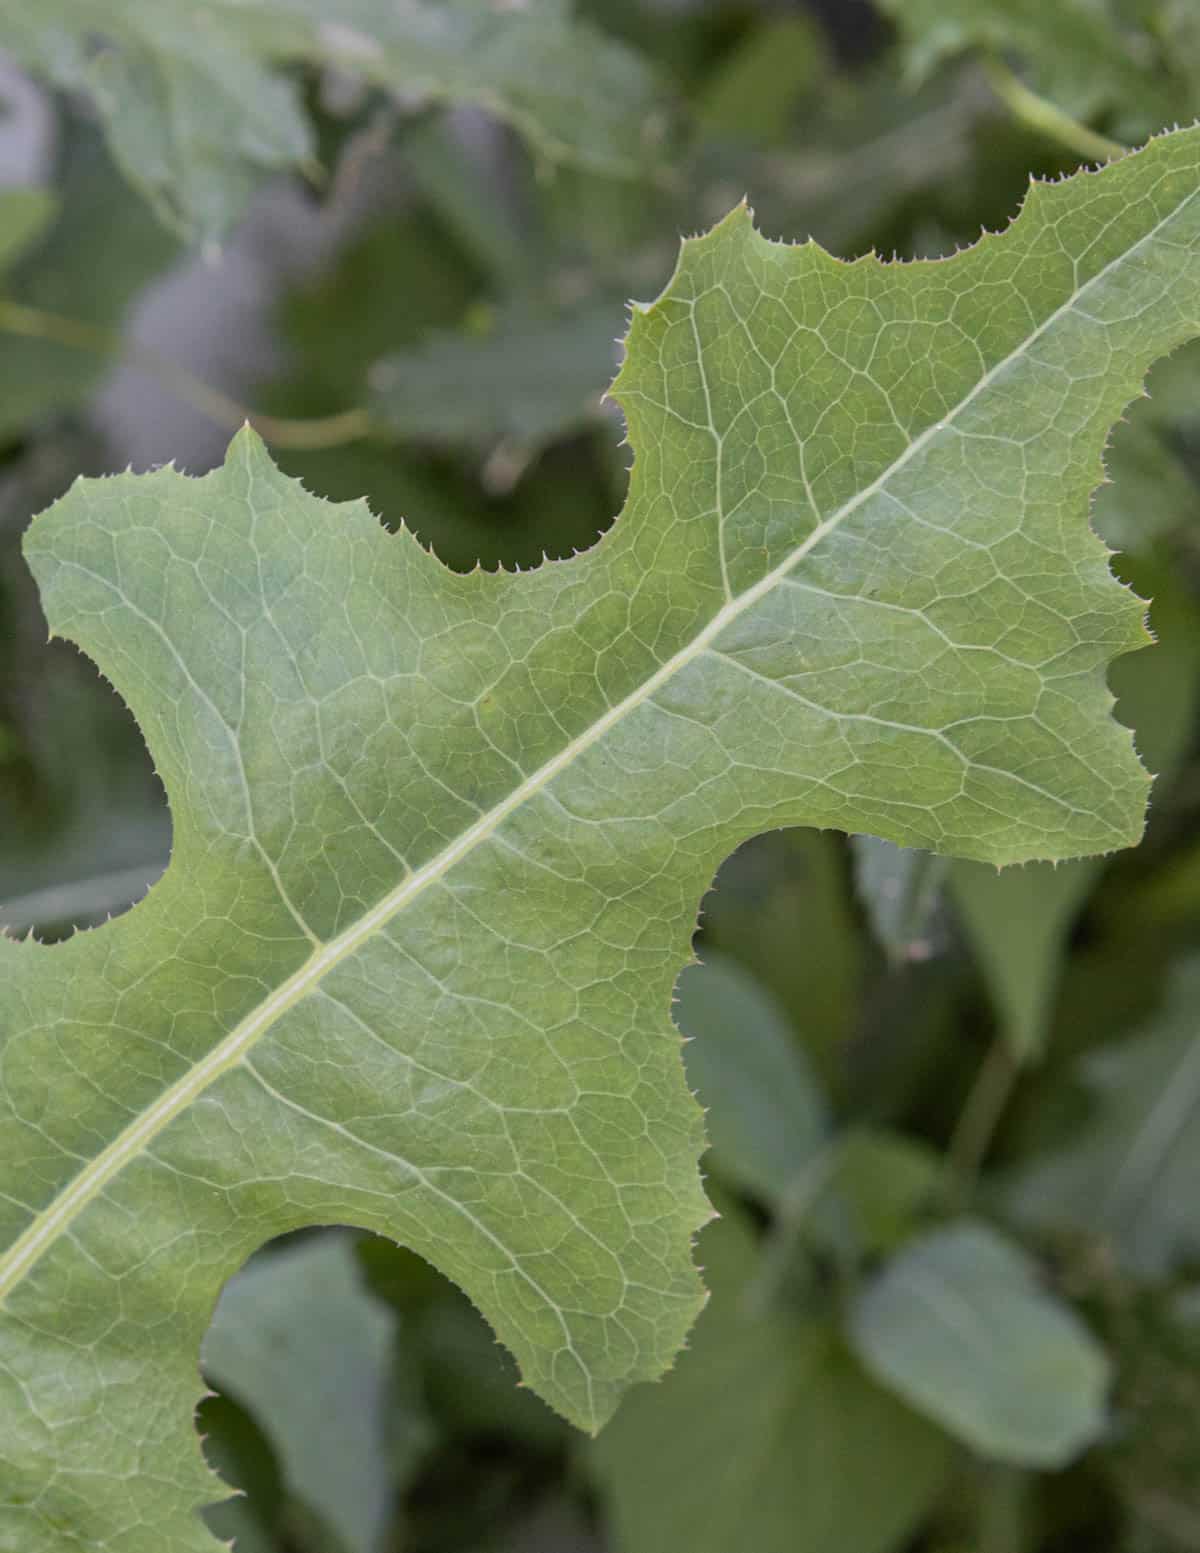 Mature prickly lettuce leaves showing irregular lobes.